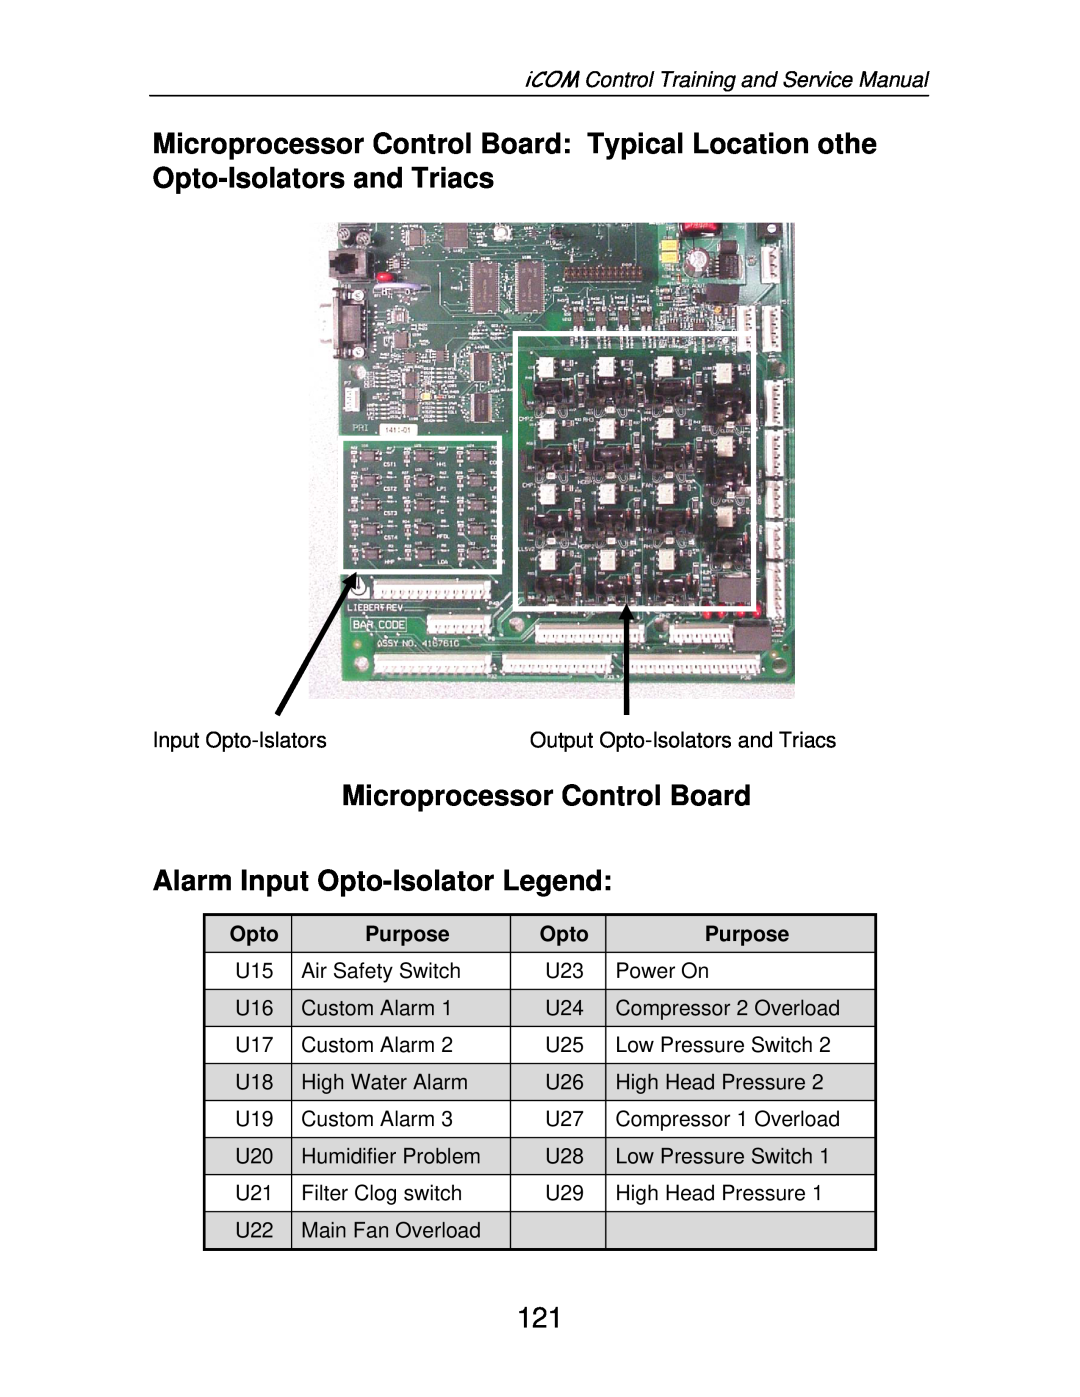 Liebert TM-10098 Microprocessor Control Board, Alarm Input Opto-IsolatorLegend, iCOM Control Training and Service Manual 